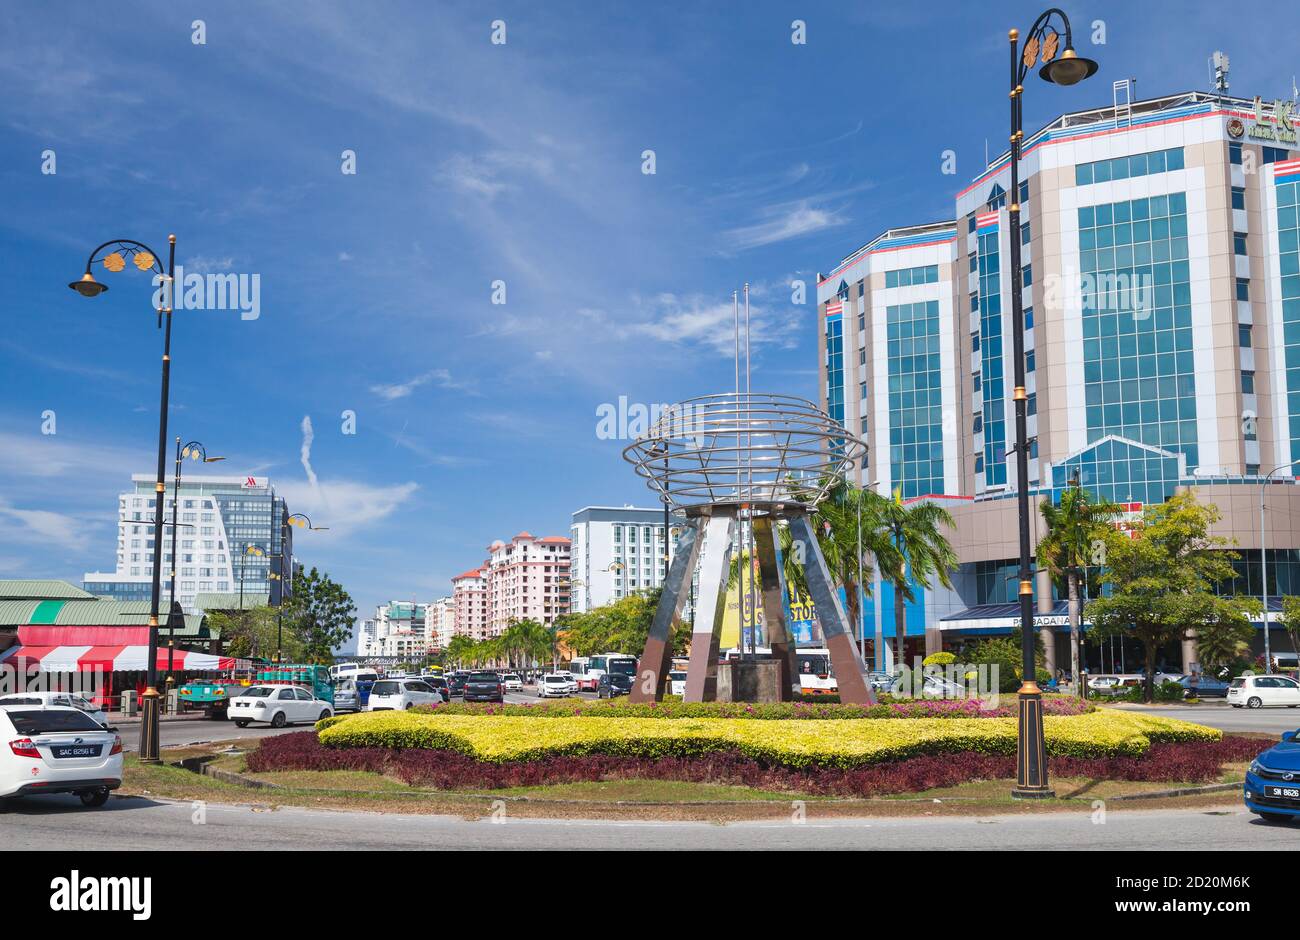 Kota Kinabalu, Malaysia - March 17, 2019: Kota Kinabalu street view, modern monument mounted on a roundabout Stock Photo